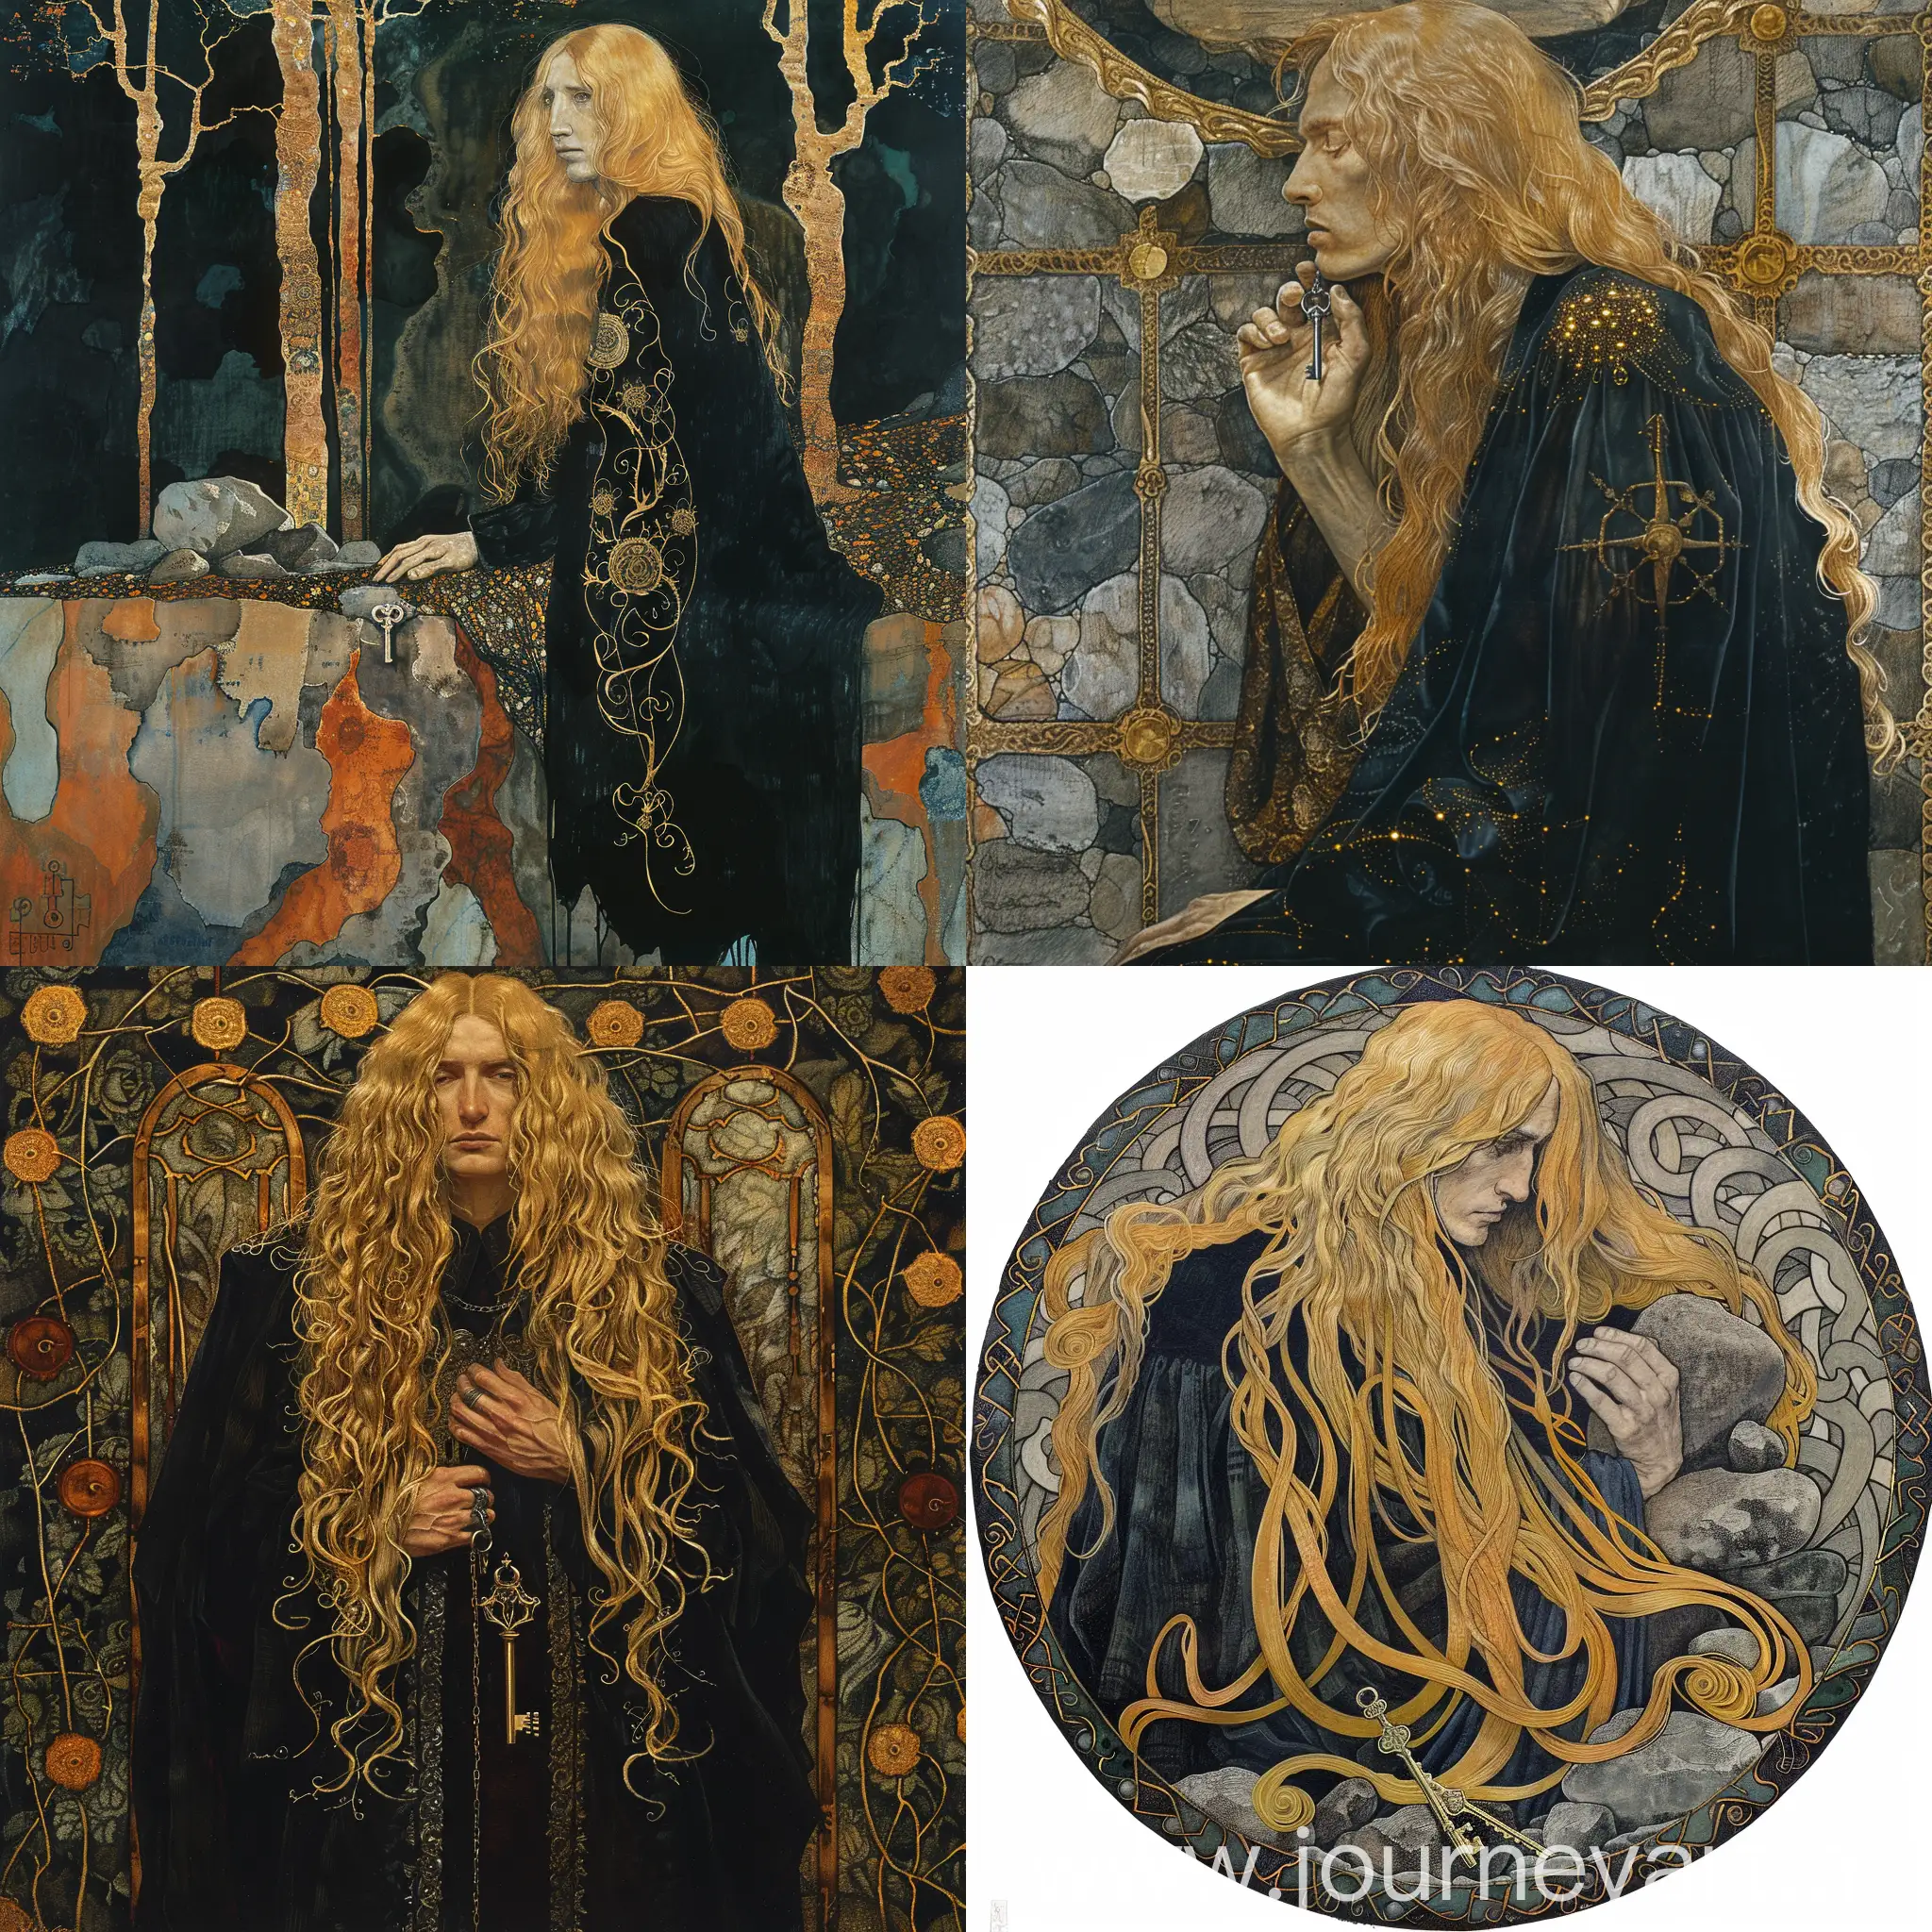 Man with long golden hair, in the black mantle, keys, rocks, art nouveau